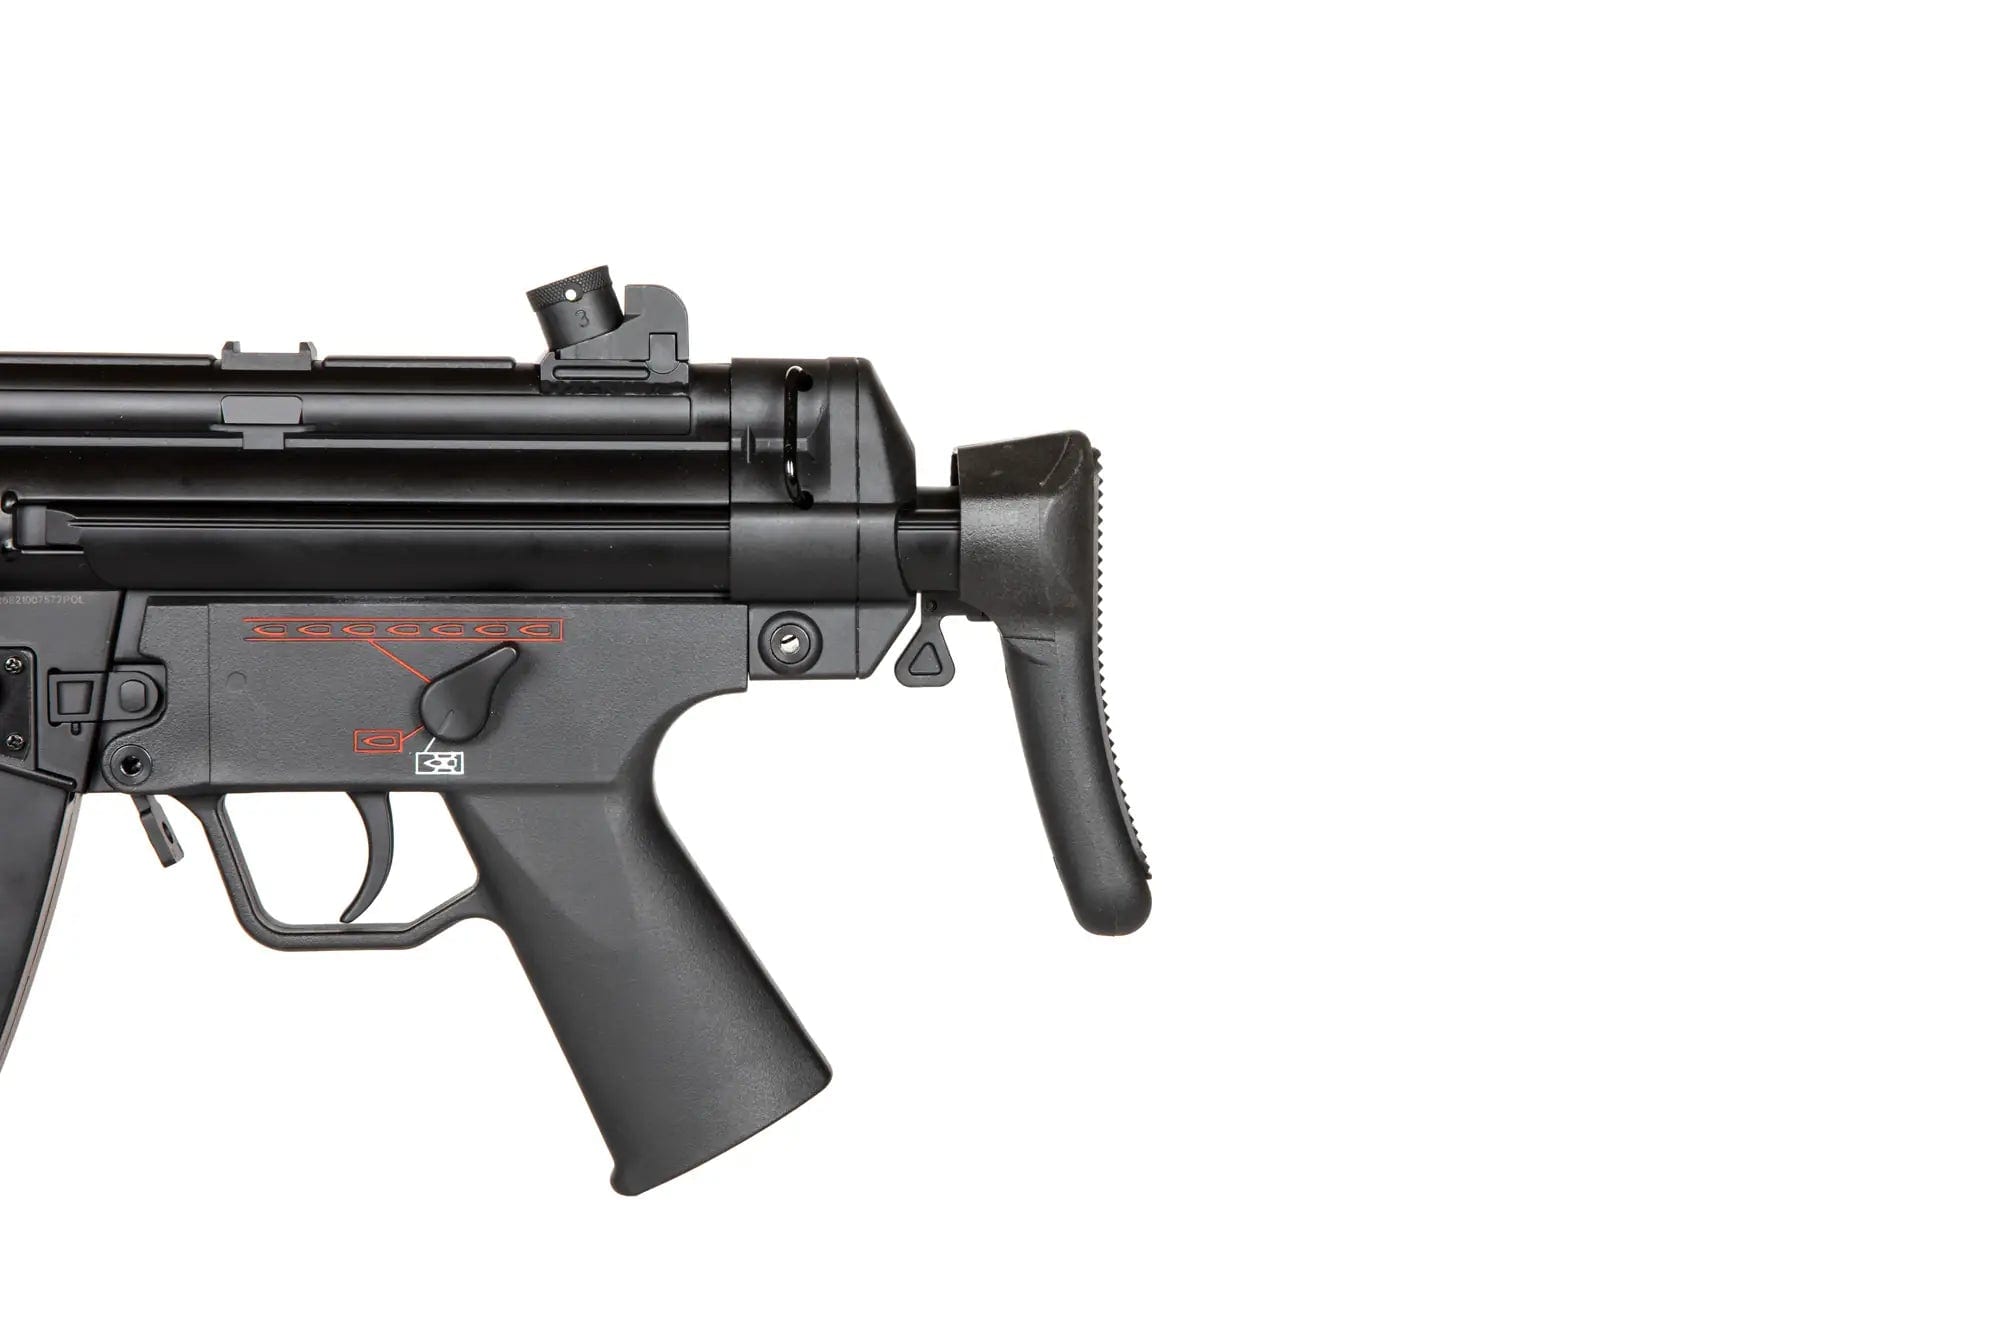 MP5A5 Submachine Gun Replica